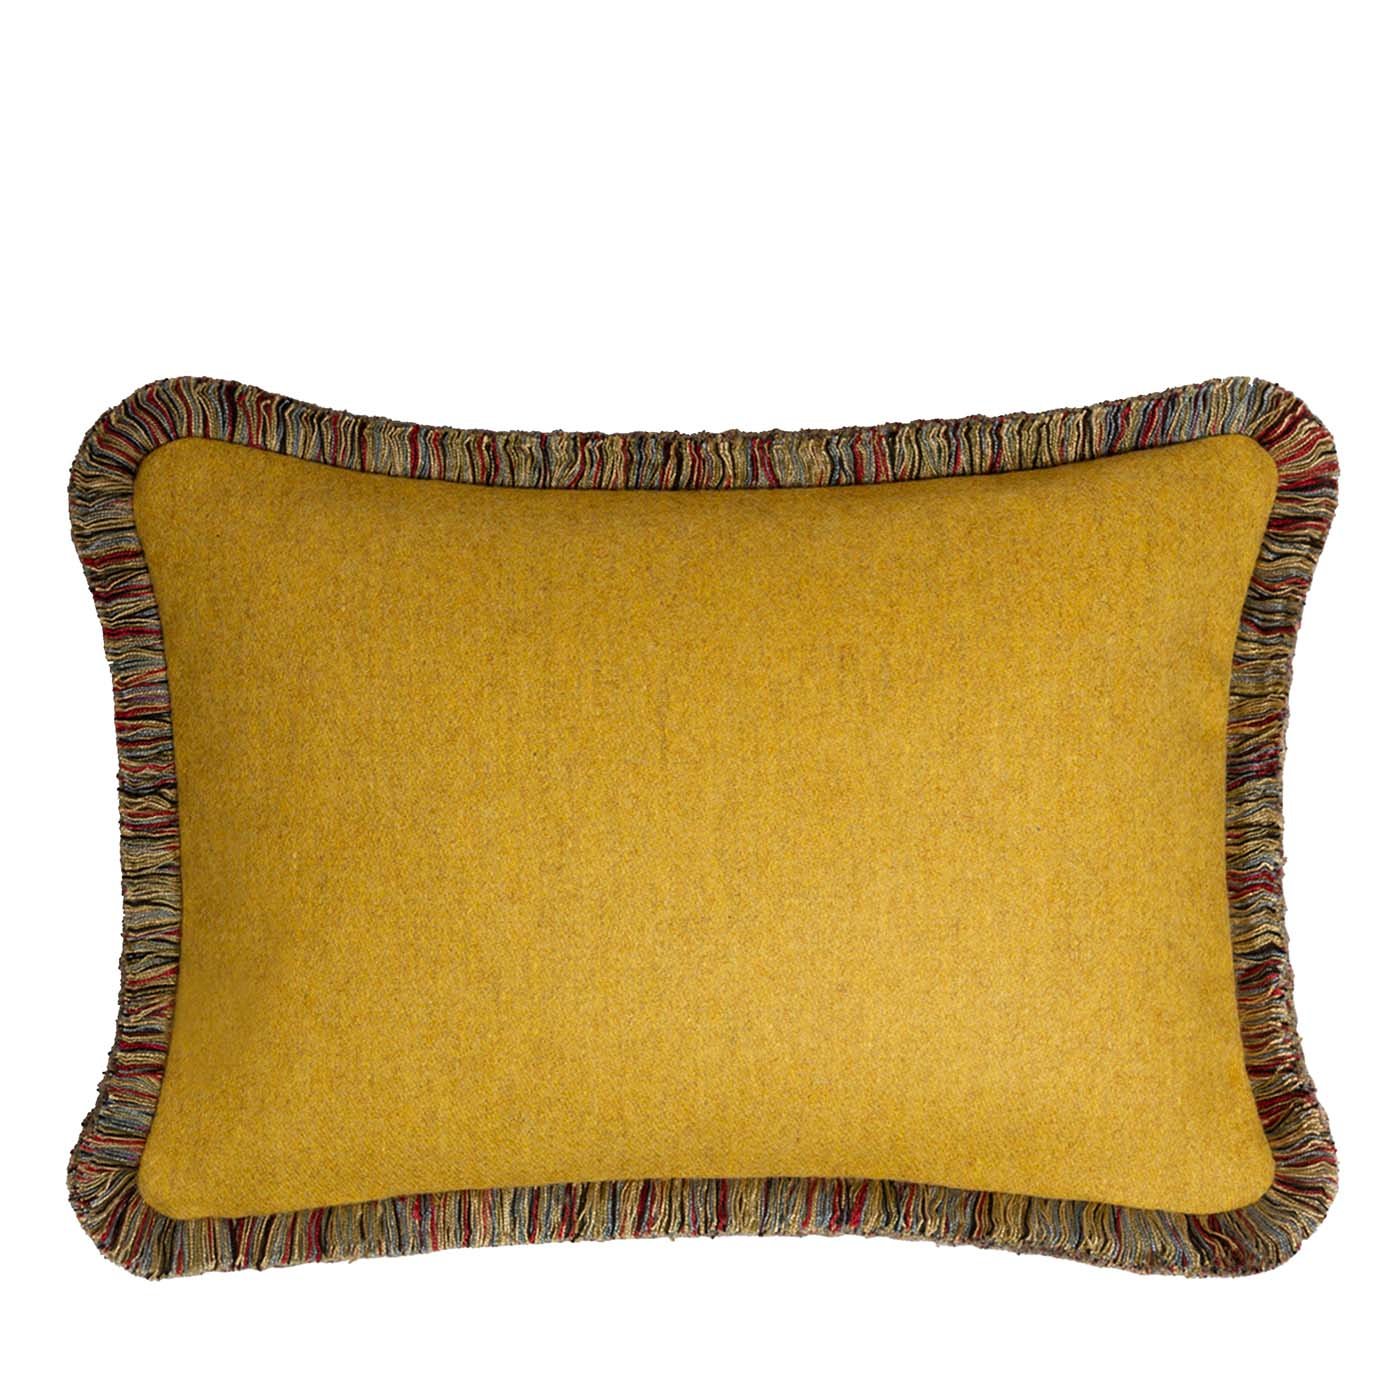 Mongolia Mustard Rectangular Cushion - Main view